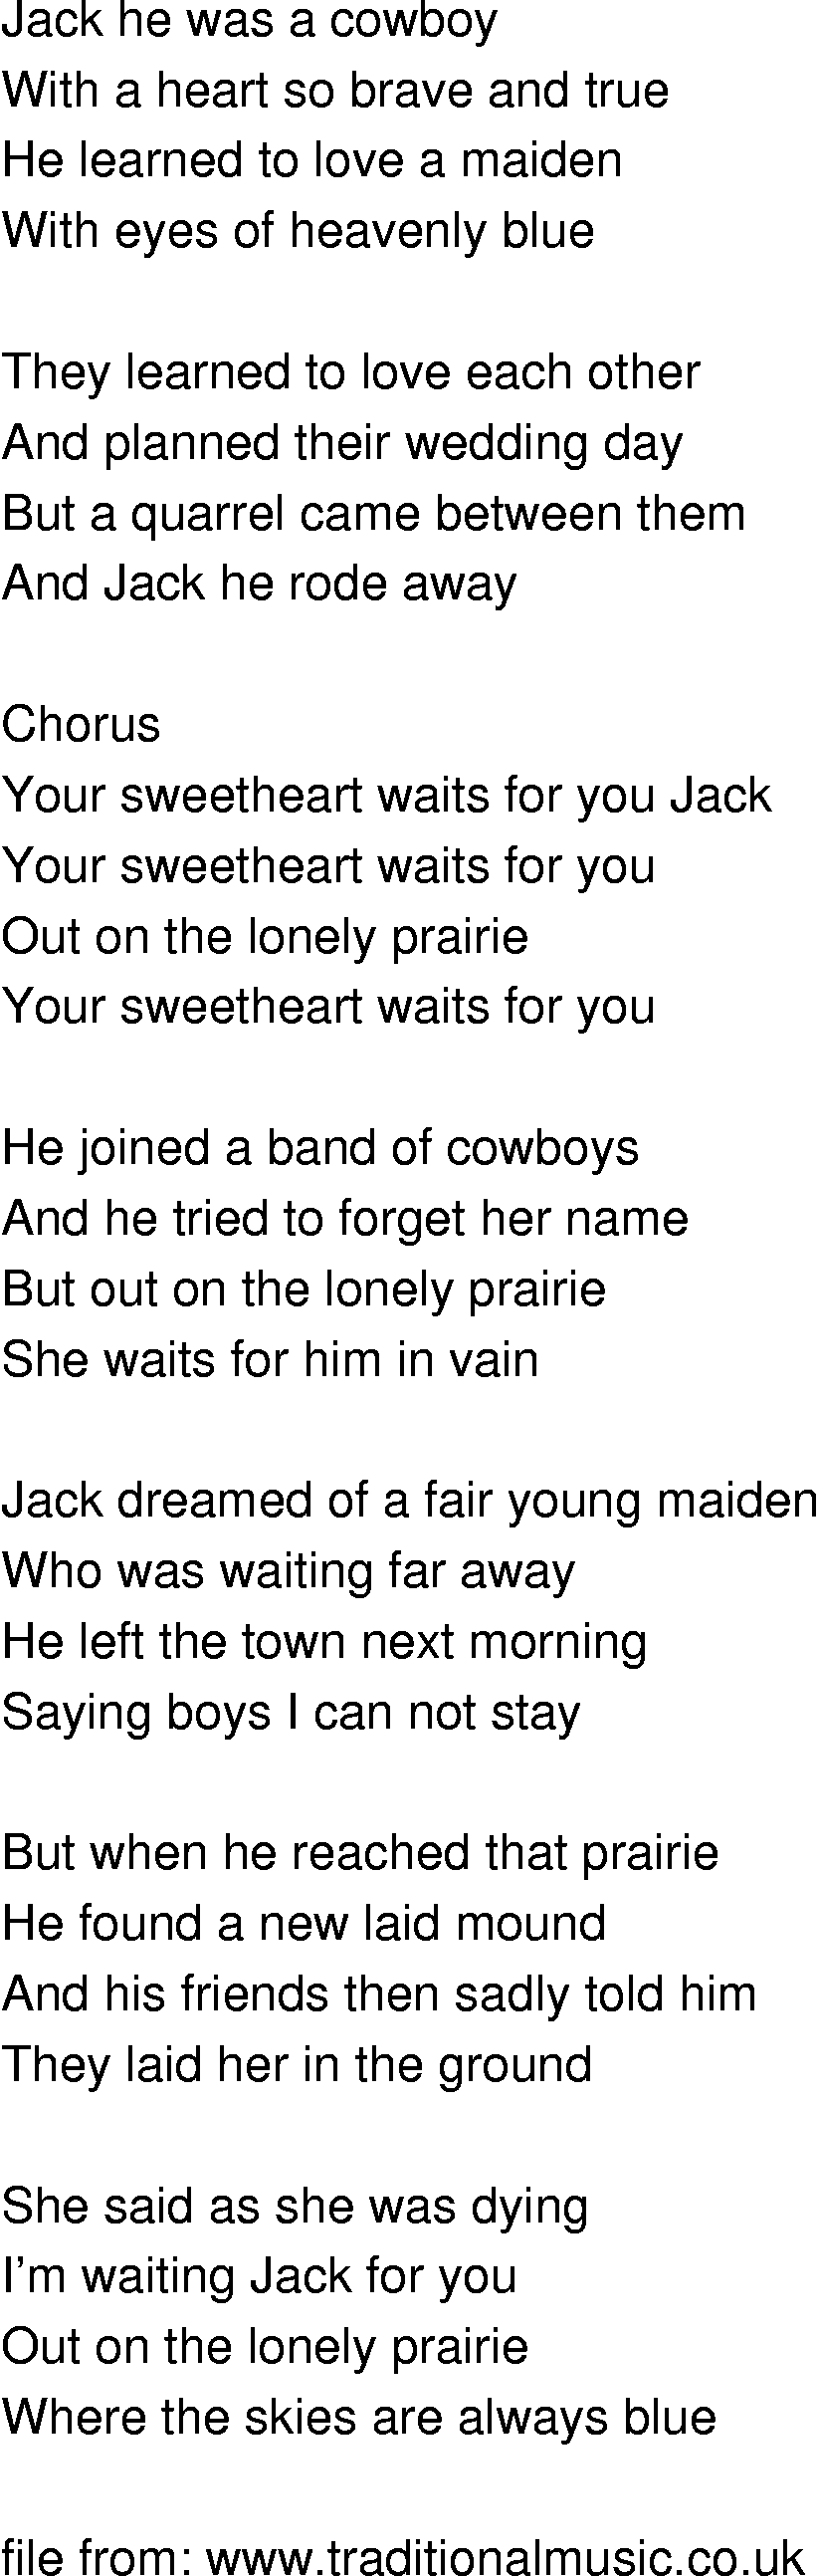 Old-Time (oldtimey) Song Lyrics - cowboy jack